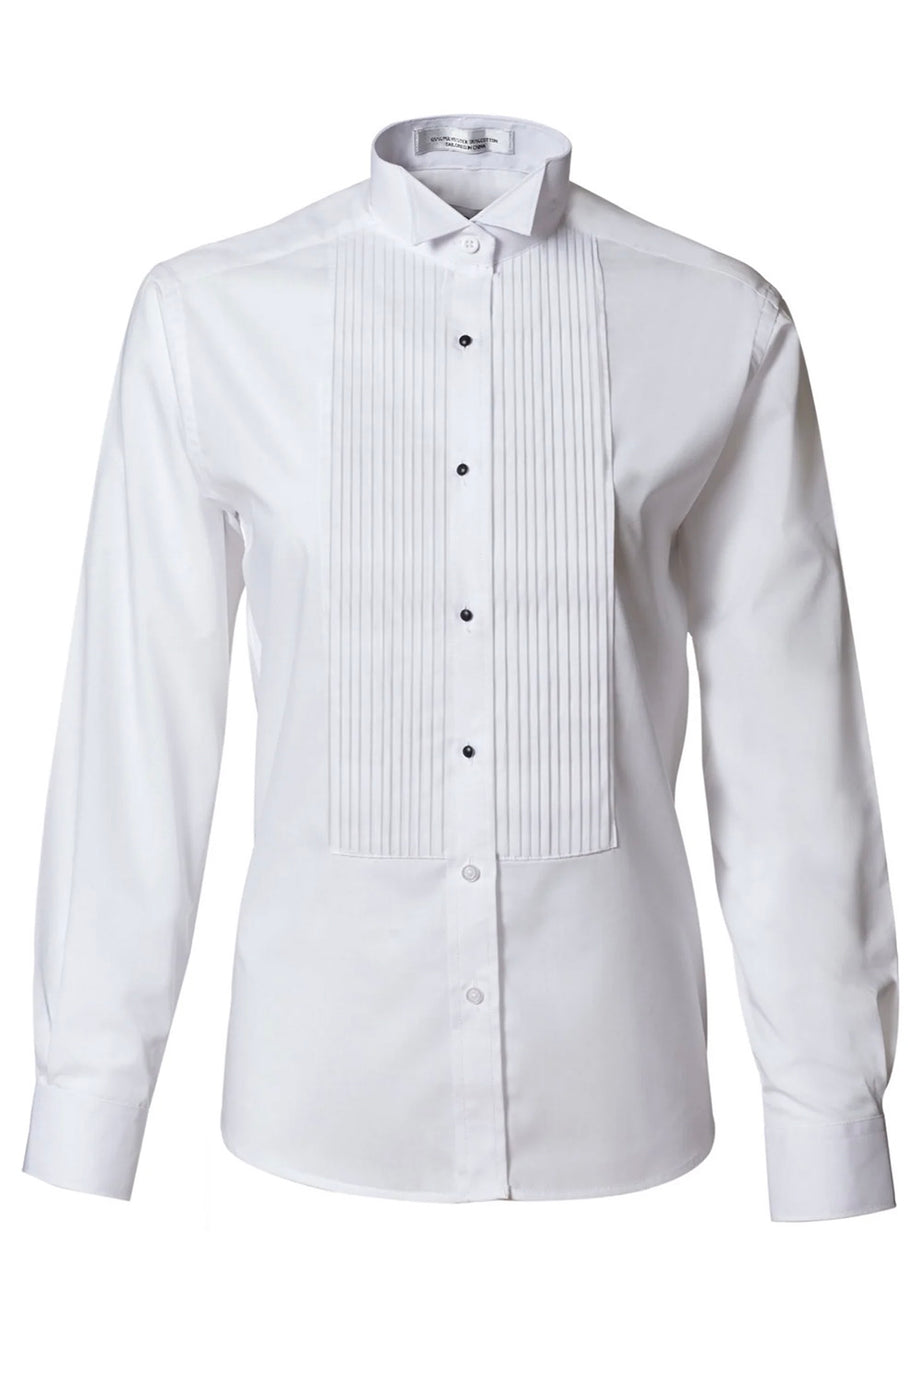 "Aubrey" Women's White Pleated Wingtip Tuxedo Shirt